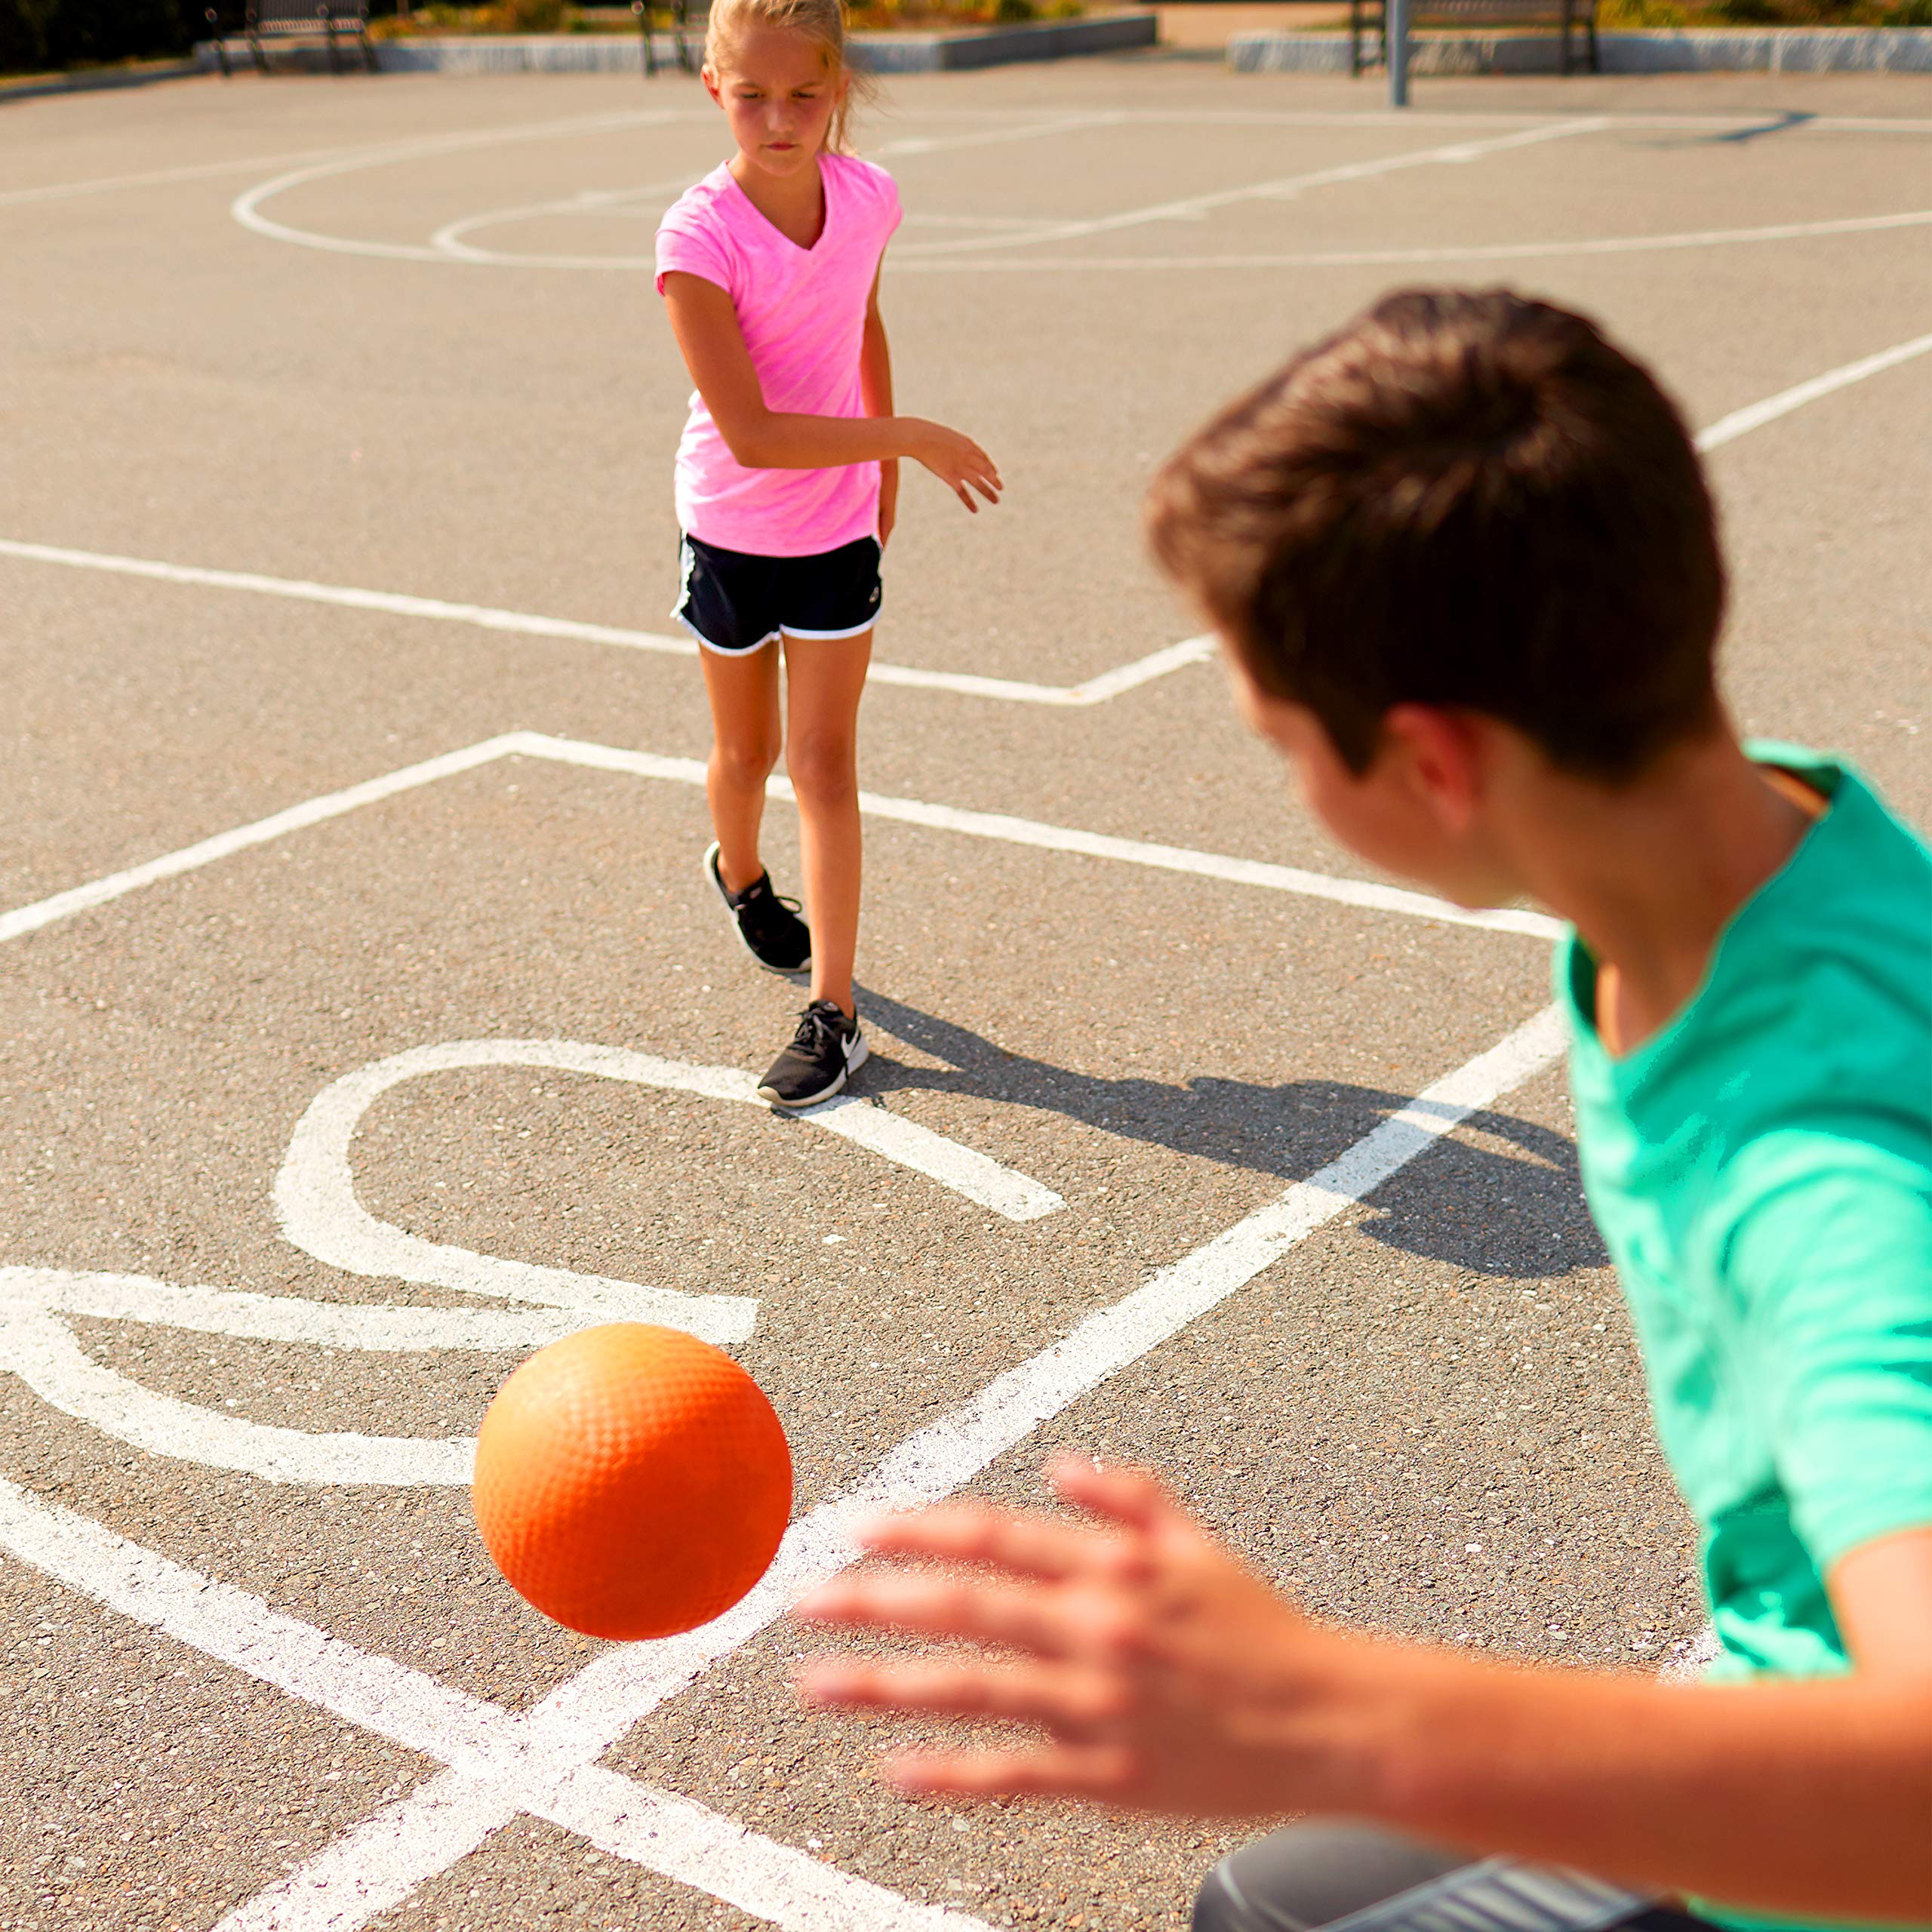 Franklin Sports Kids Playground Balls - Rubber Kickballs + Playground Balls For Kids - Great for Dodgeball, Kickball, 4 Square + Schoolyard Games - 8.5” Diameter